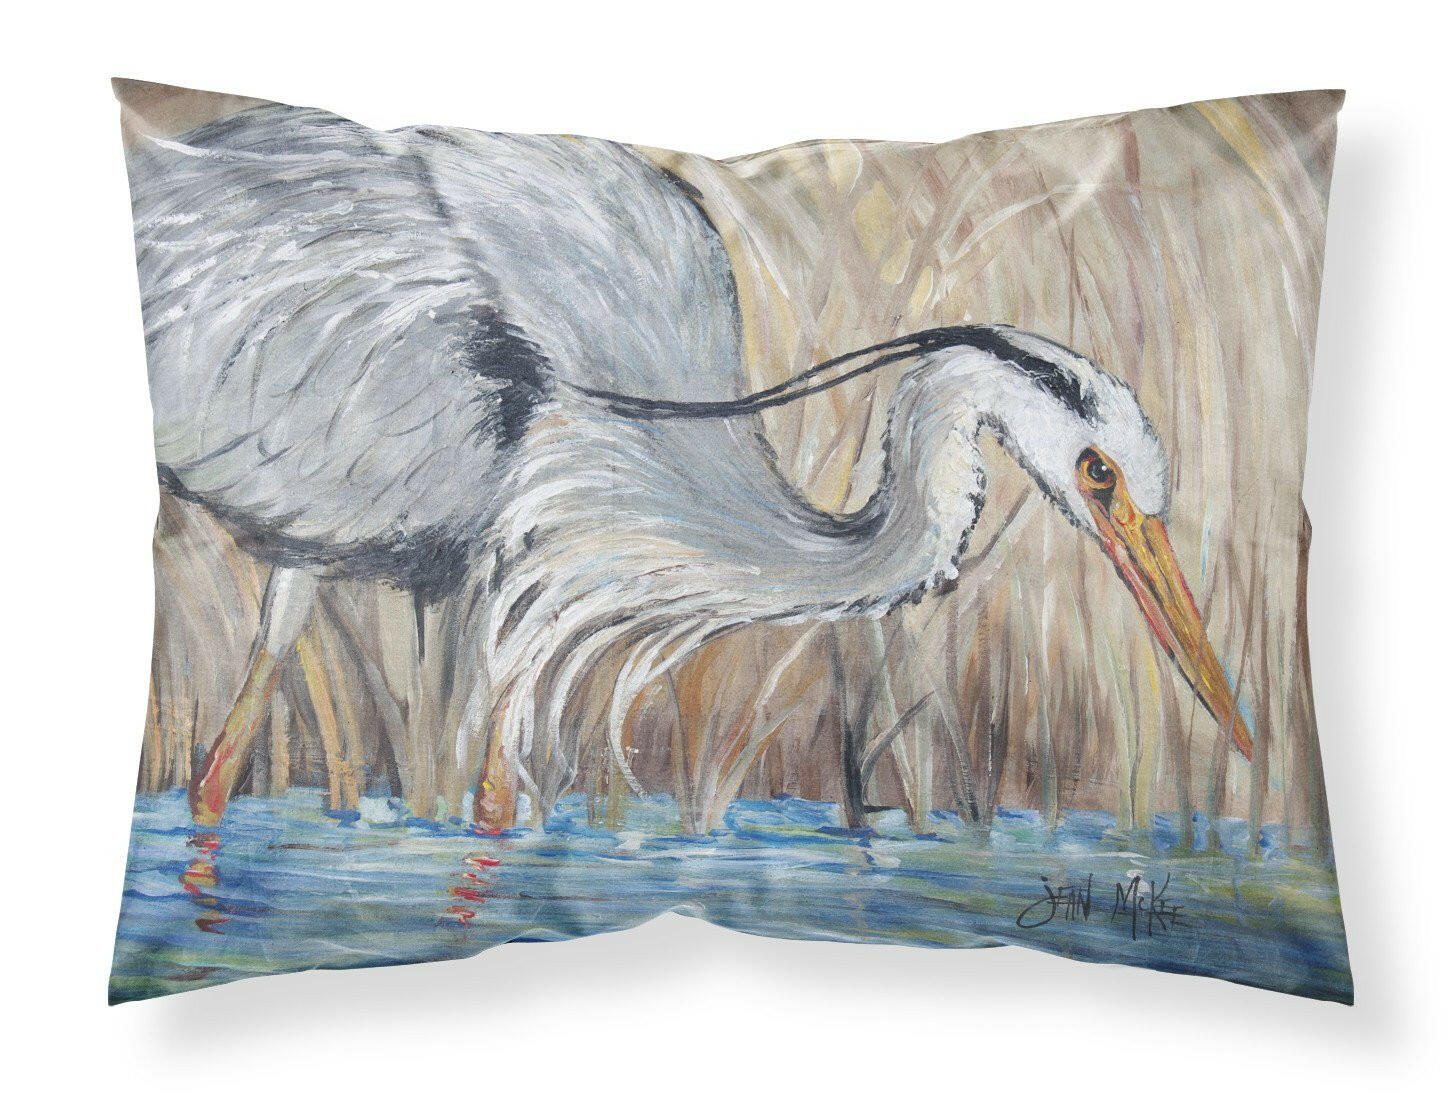 Blue Heron in the reeds Fabric Standard Pillowcase JMK1013PILLOWCASE by Caroline's Treasures